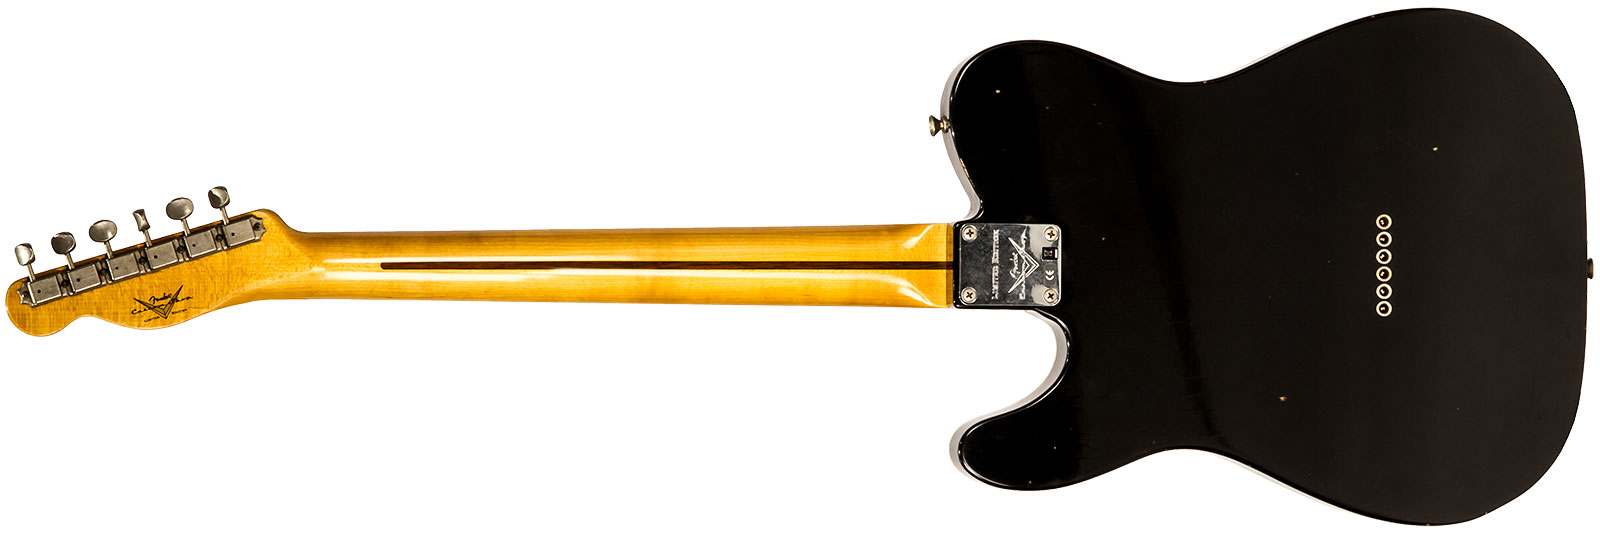 Fender Custom Shop Double Esquire/tele Custom 2s Ht Mn #r97434 - Journeyman Relic Aged Pink Paisley - Semi-Hollow E-Gitarre - Variation 1